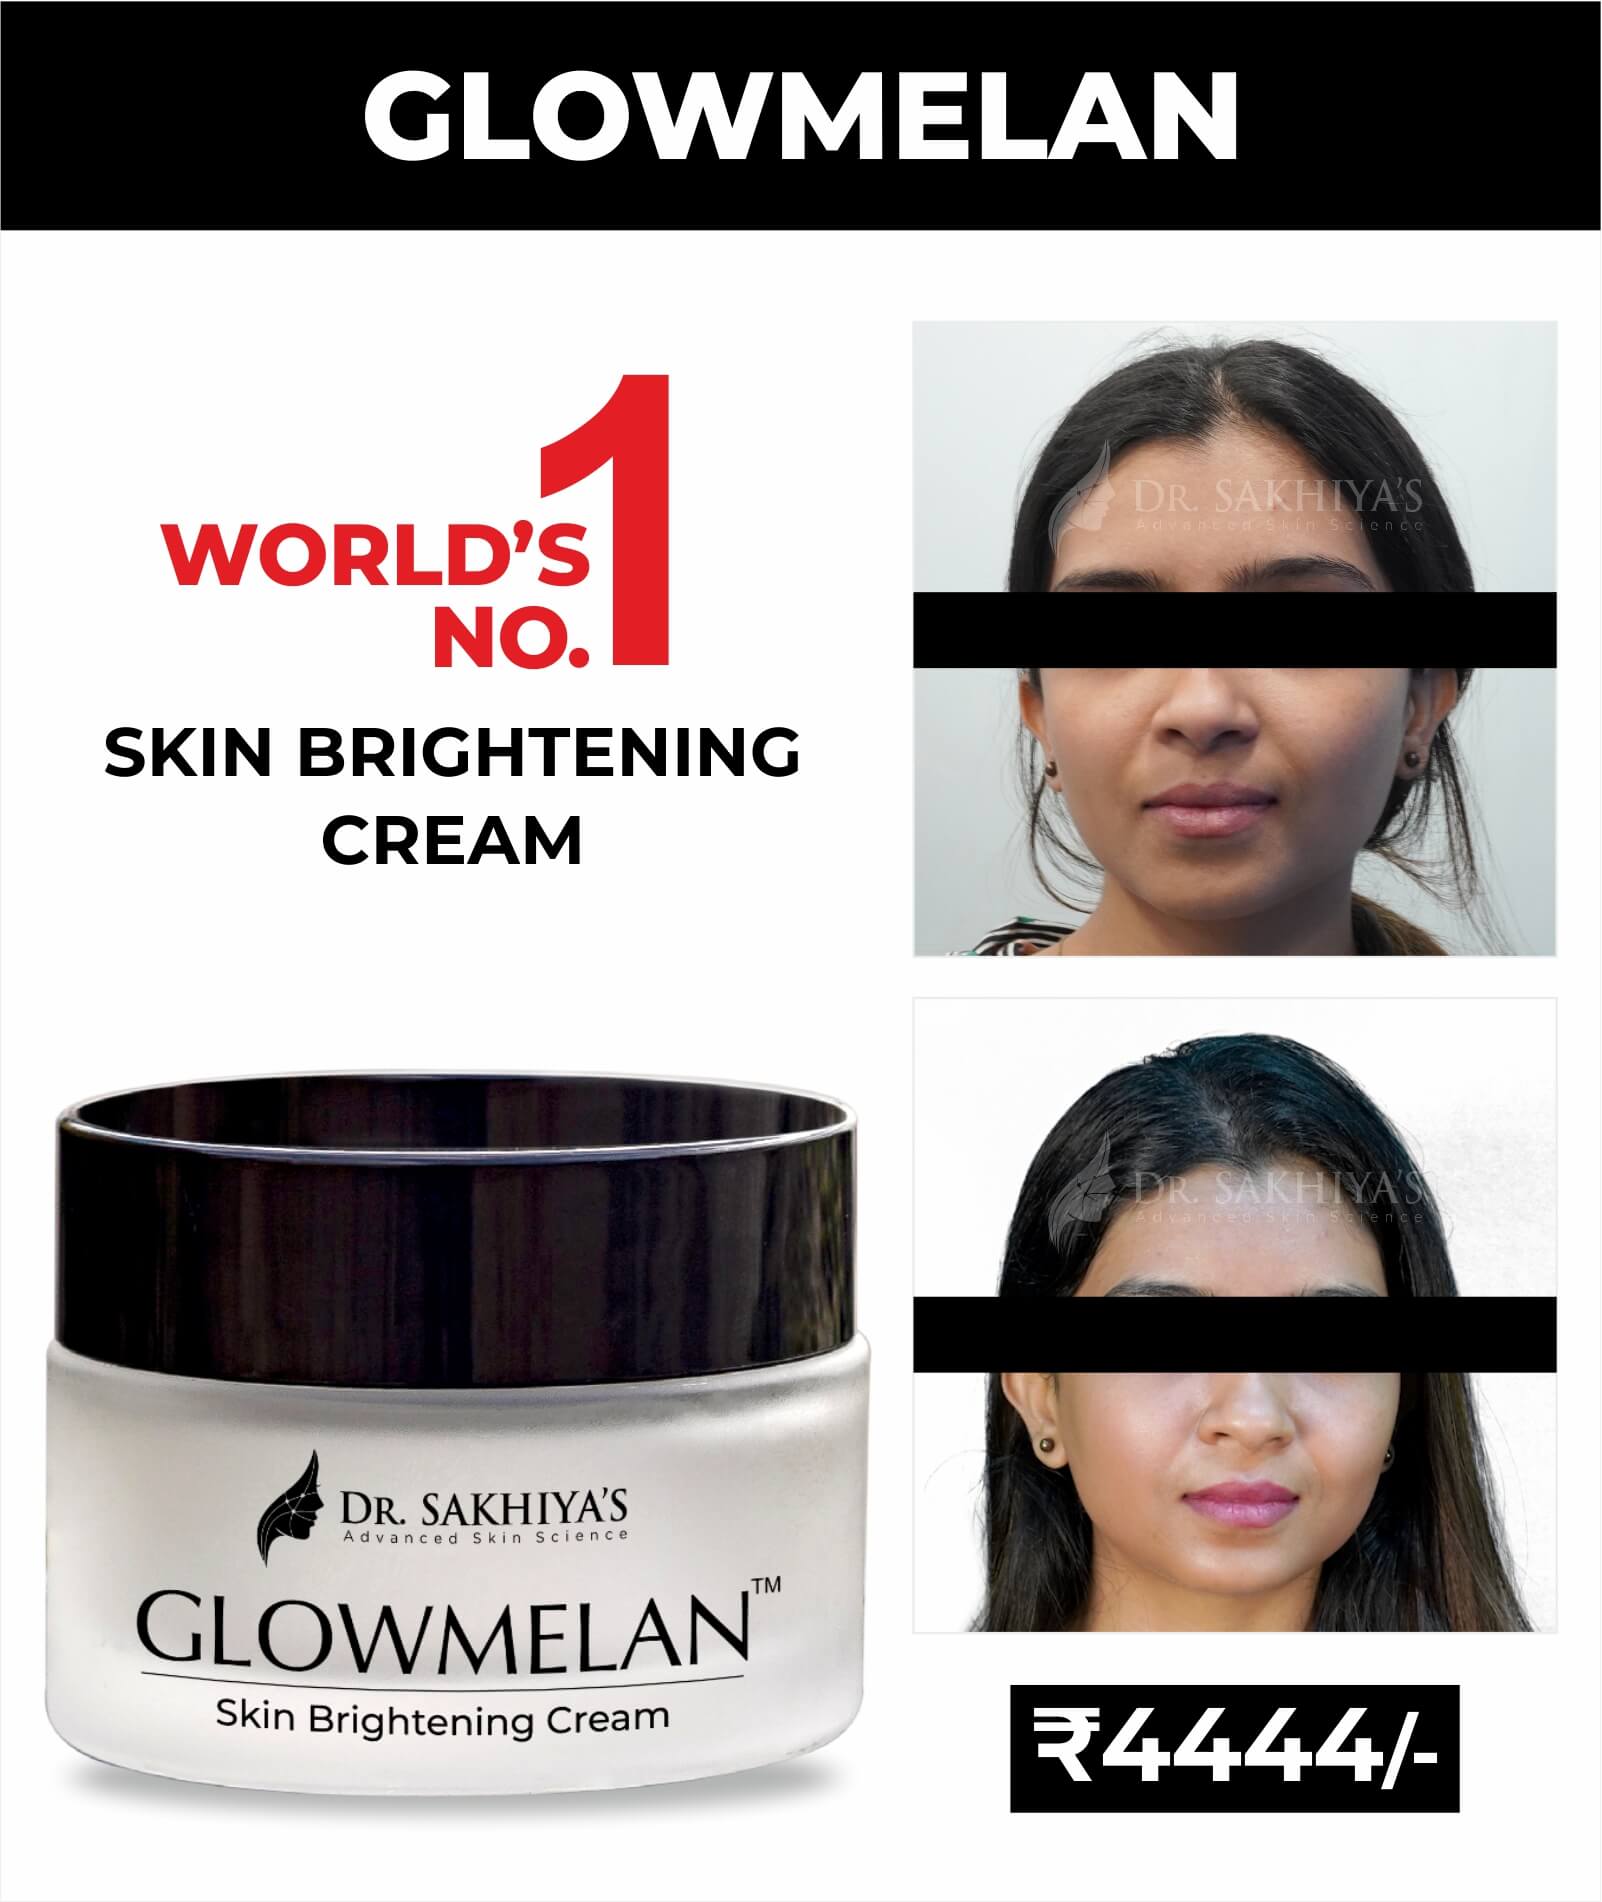 GLOWMELAN -  The Ultimate Skin Brightening and Depigmentation Cream